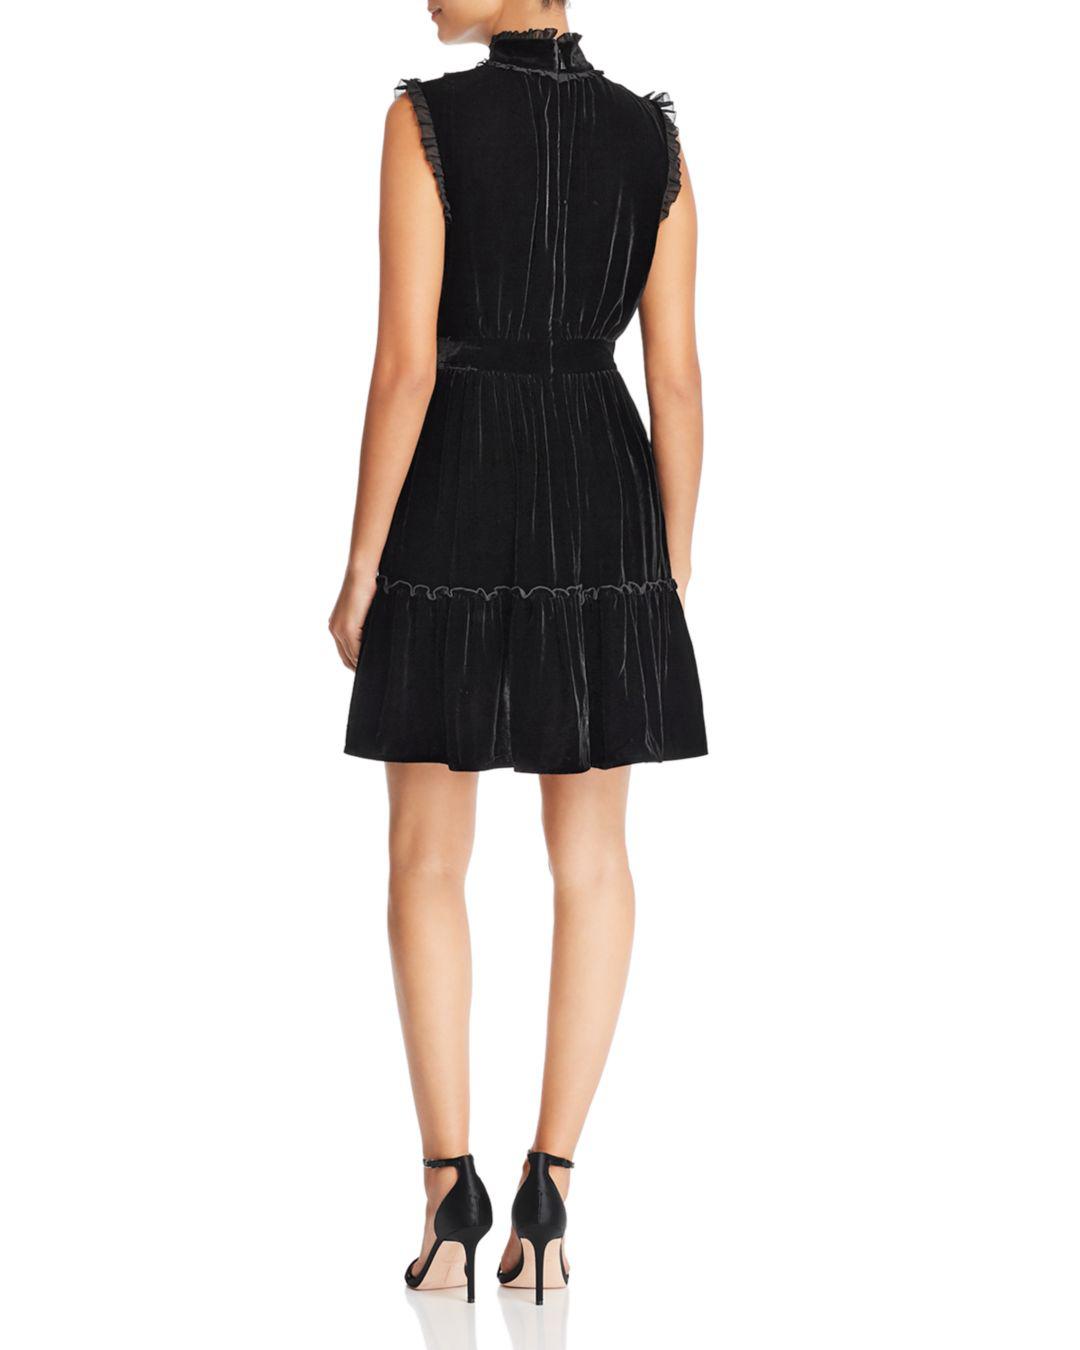 Kate Spade Velvet Lace-trim Dress in Black - Lyst